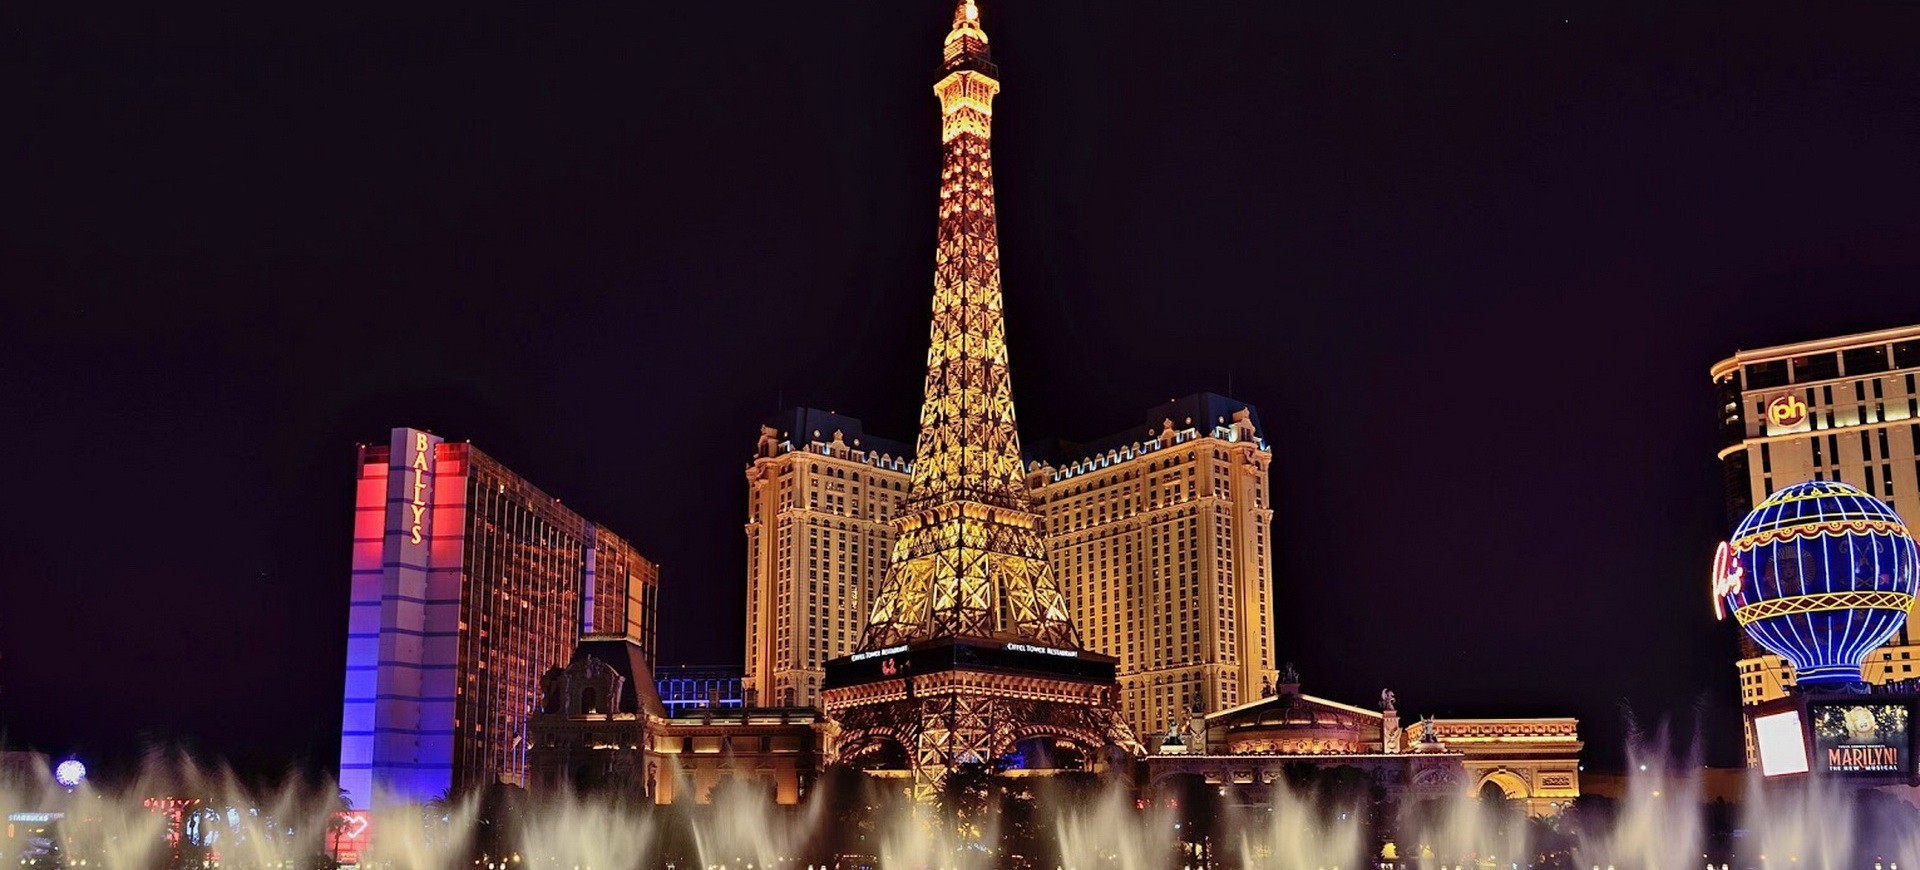 Etats Unis Las Vegas by night